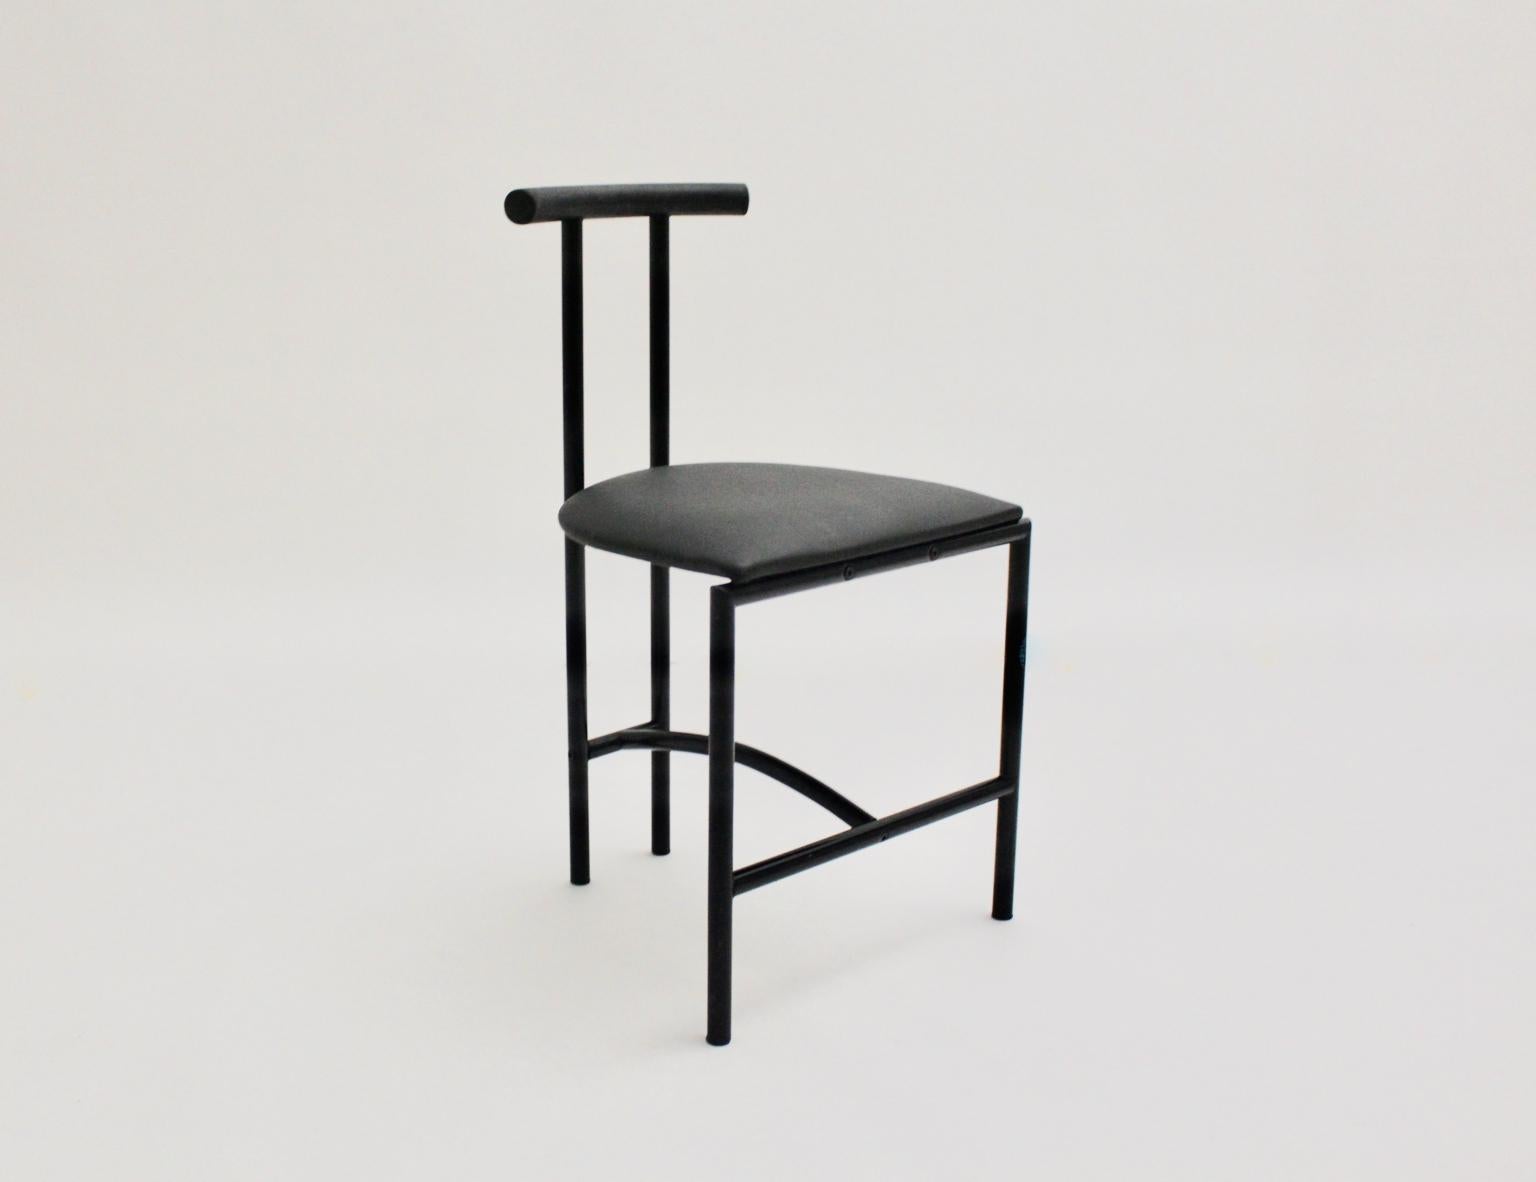 Moderner moderner schwarzer Tokyo-Stuhl aus Metall und Kunstleder von Rodney Kinsman, 1985, UK (Ende des 20. Jahrhunderts) im Angebot